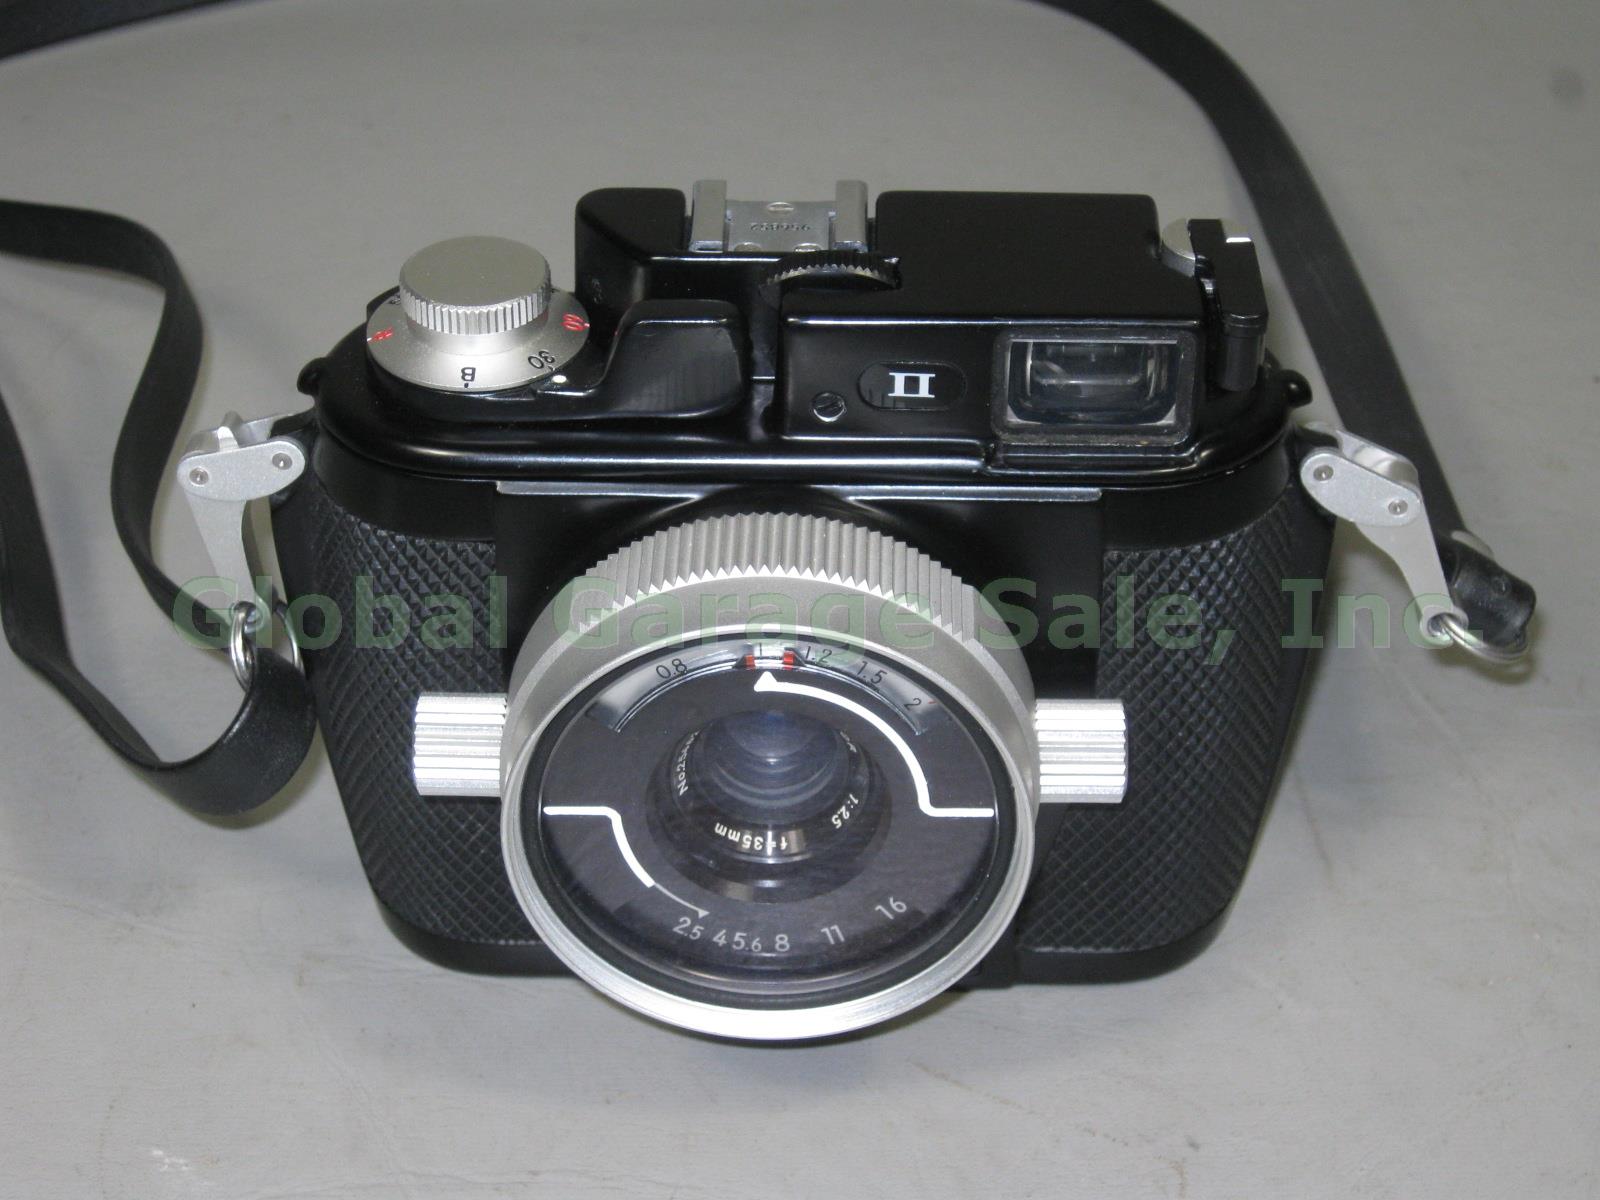 Vtg Nikon Nikonos II Underwater 35mm Camera W-Nikkor f/2.5 Lens Serial No 956852 1